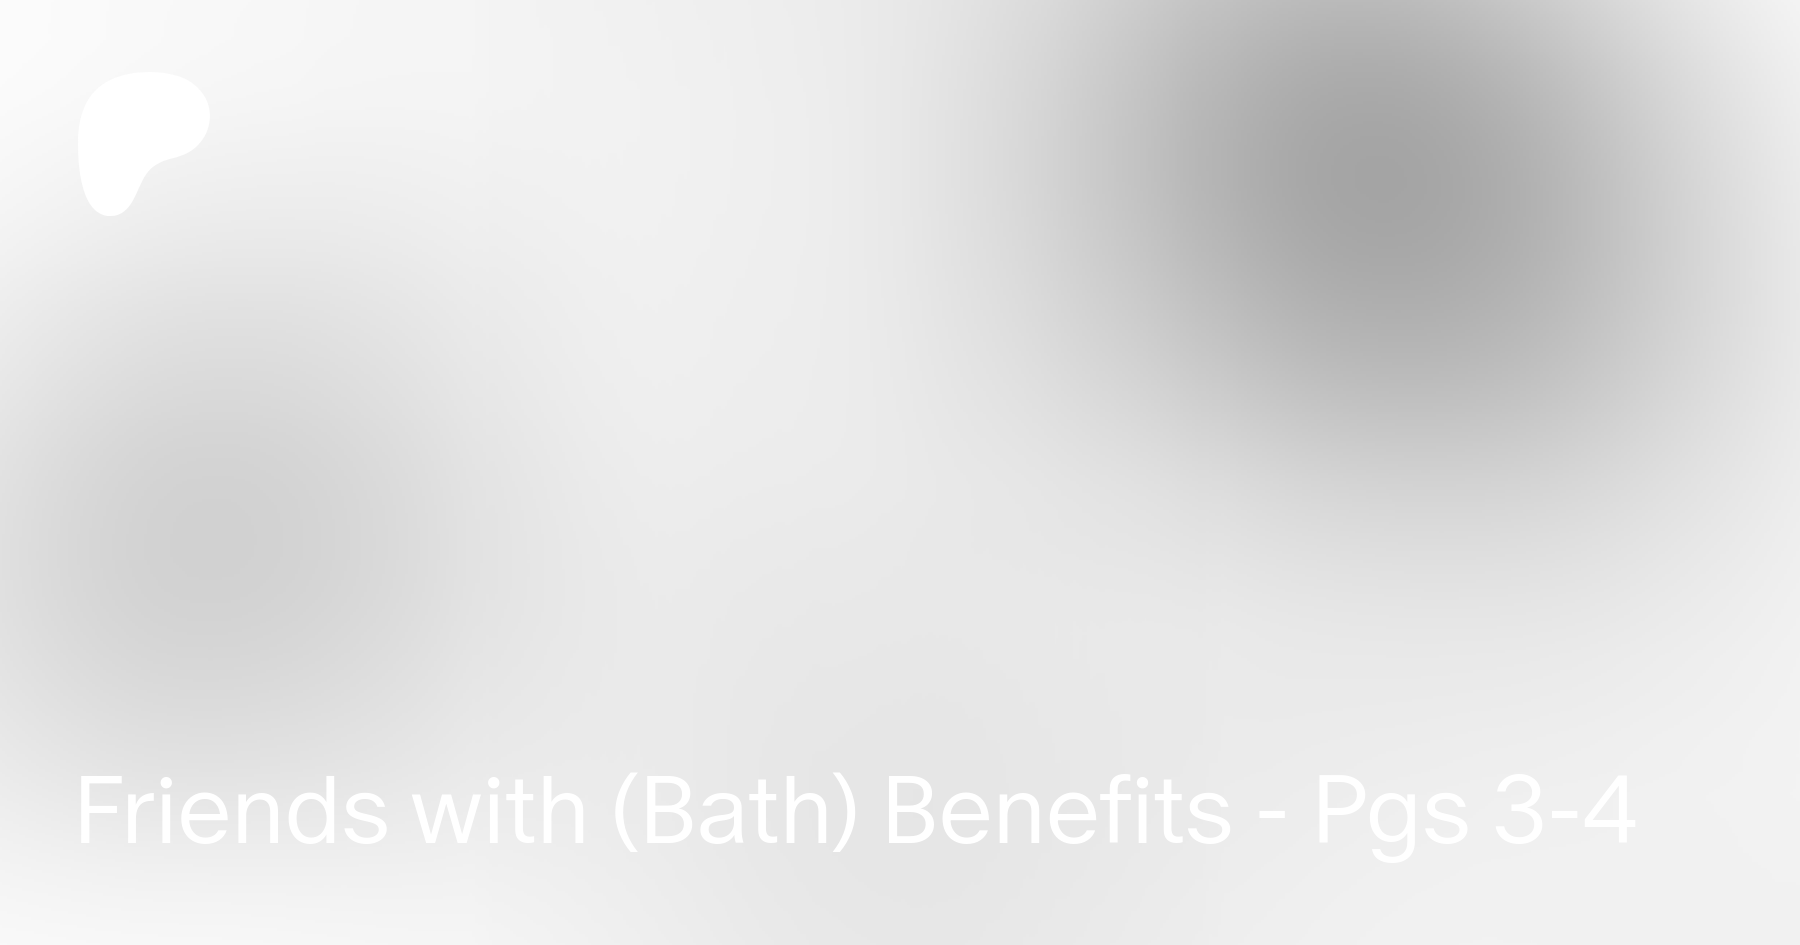 Friends with bath benefits dbz